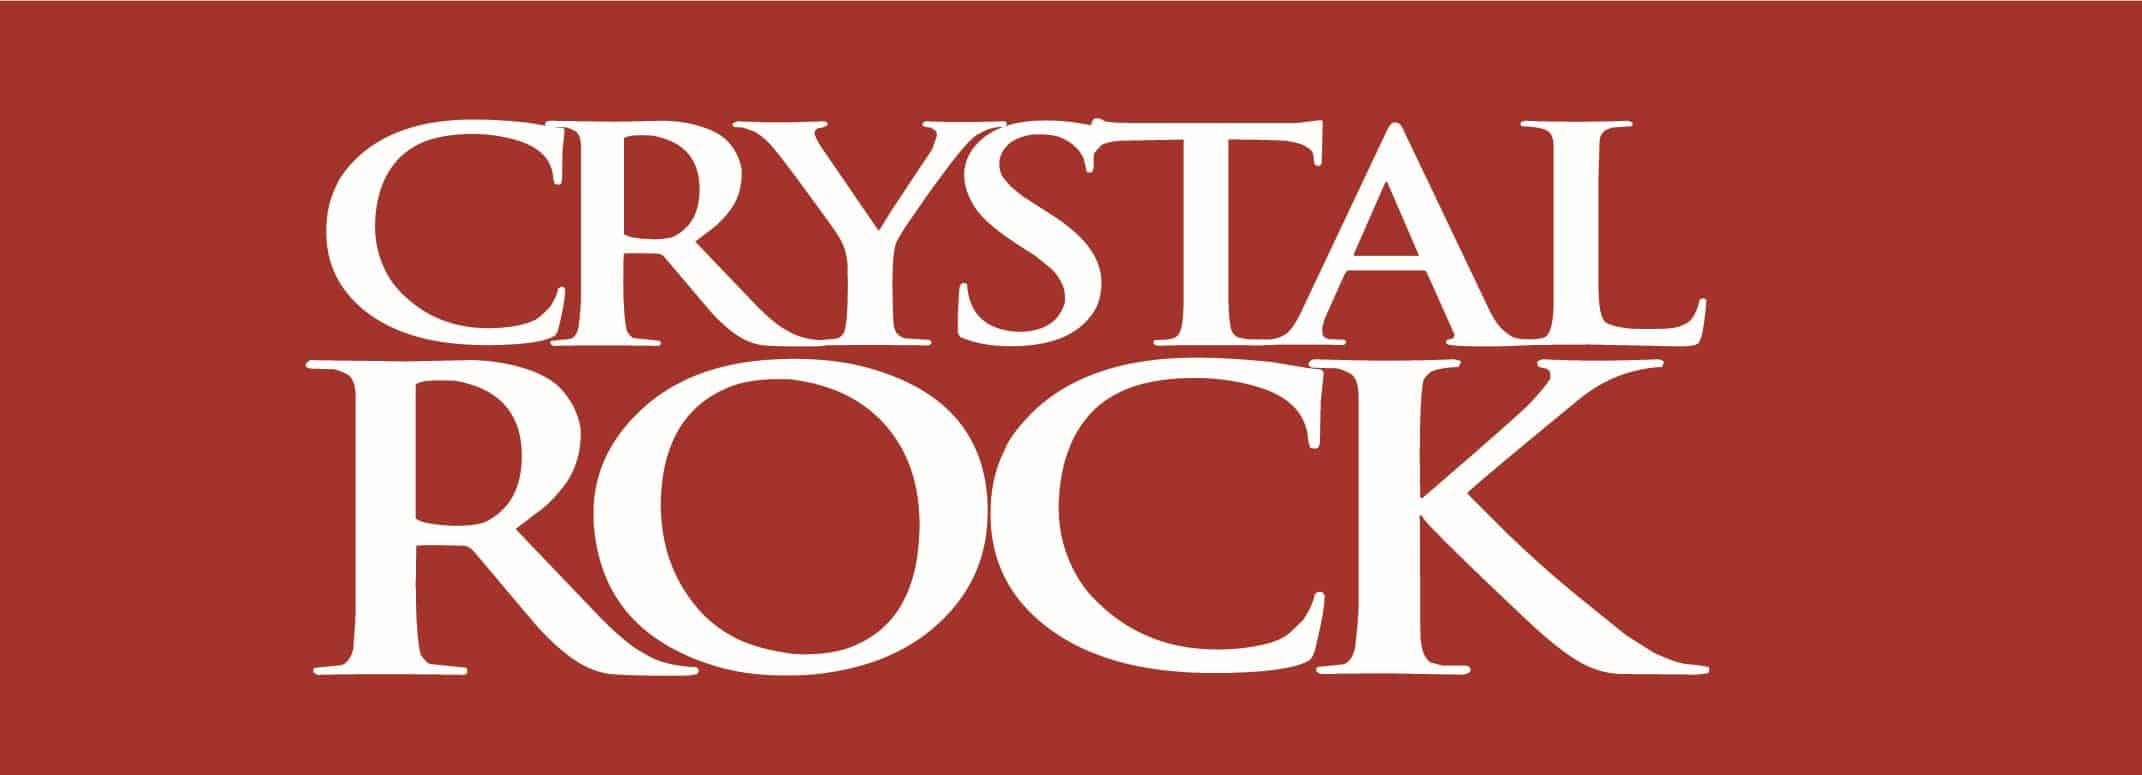 Crystal Rock